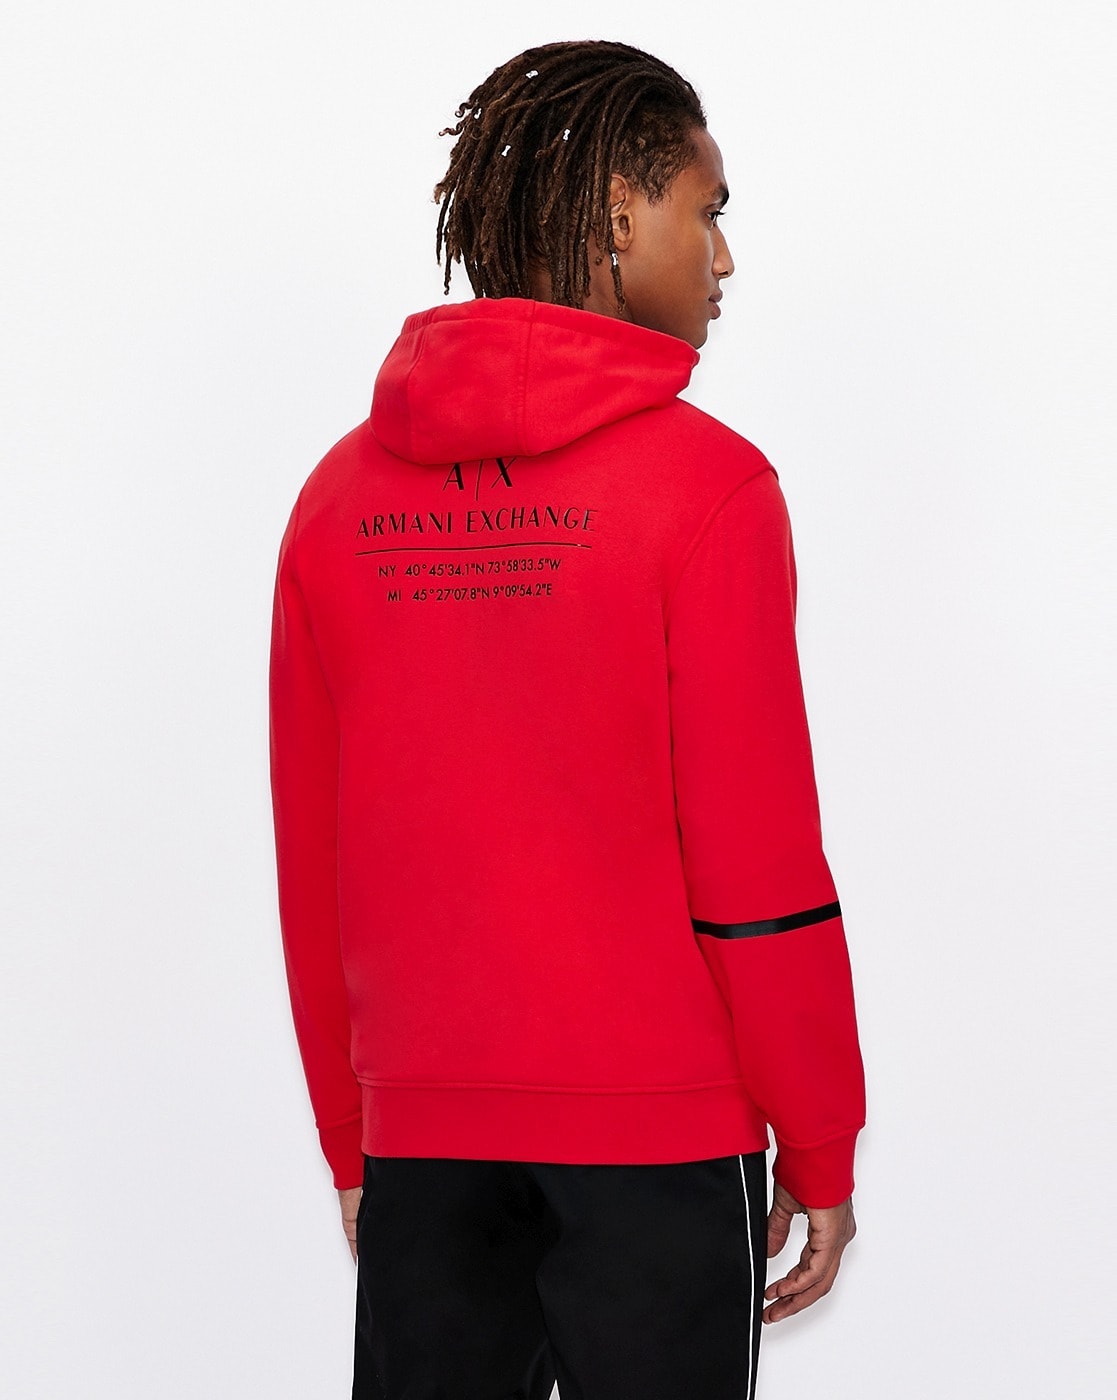 Armani Exchange Red Sweatshirt Cheap Price, Save 46% 